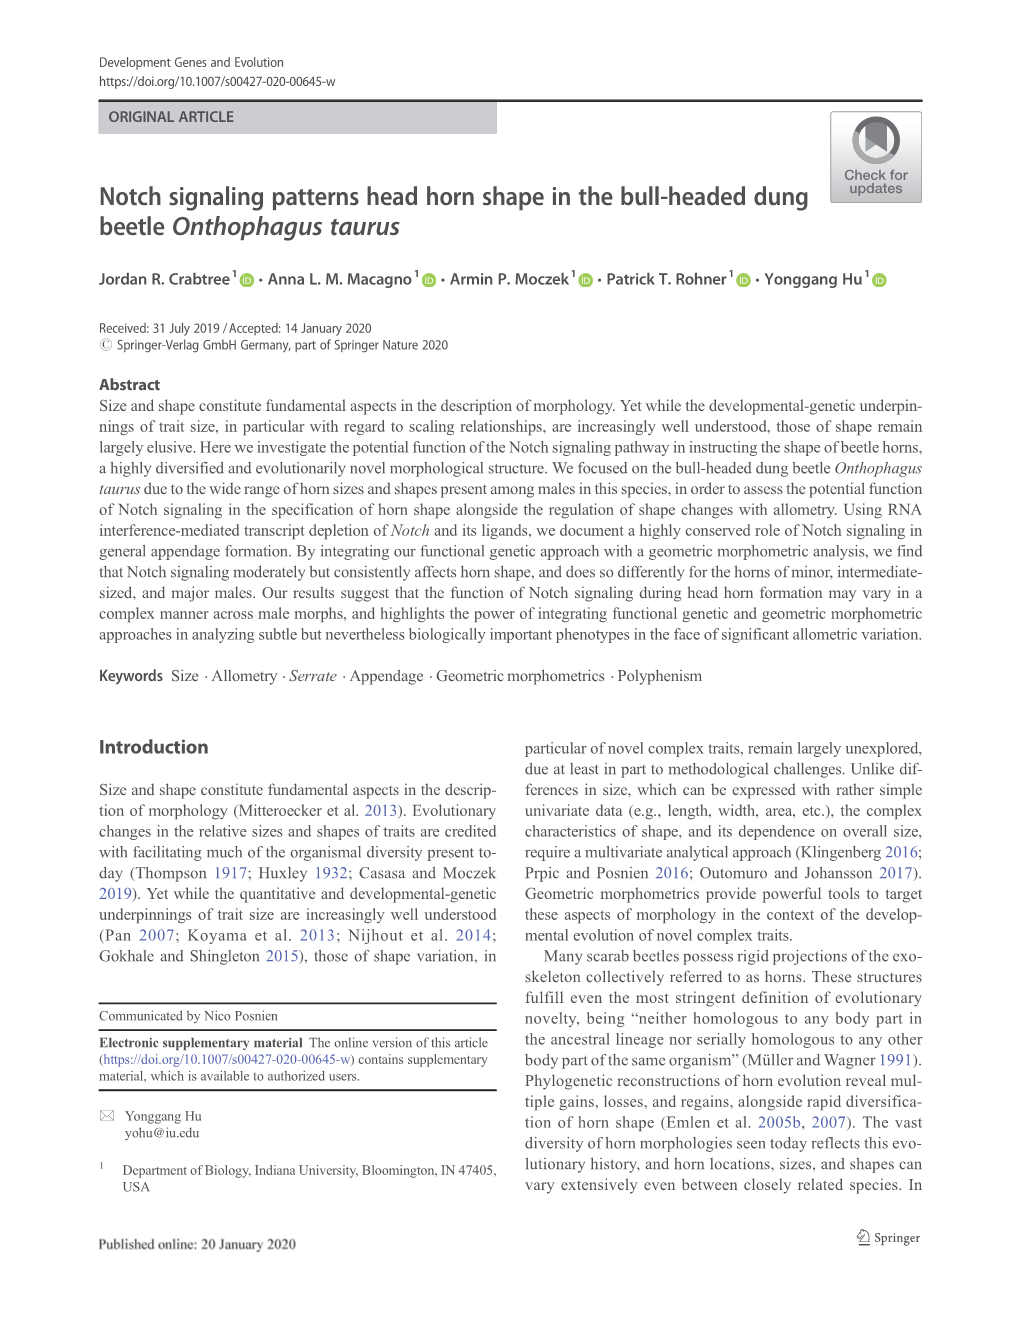 Notch Signaling Patterns Head Horn Shape in the Bull-Headed Dung Beetle Onthophagus Taurus